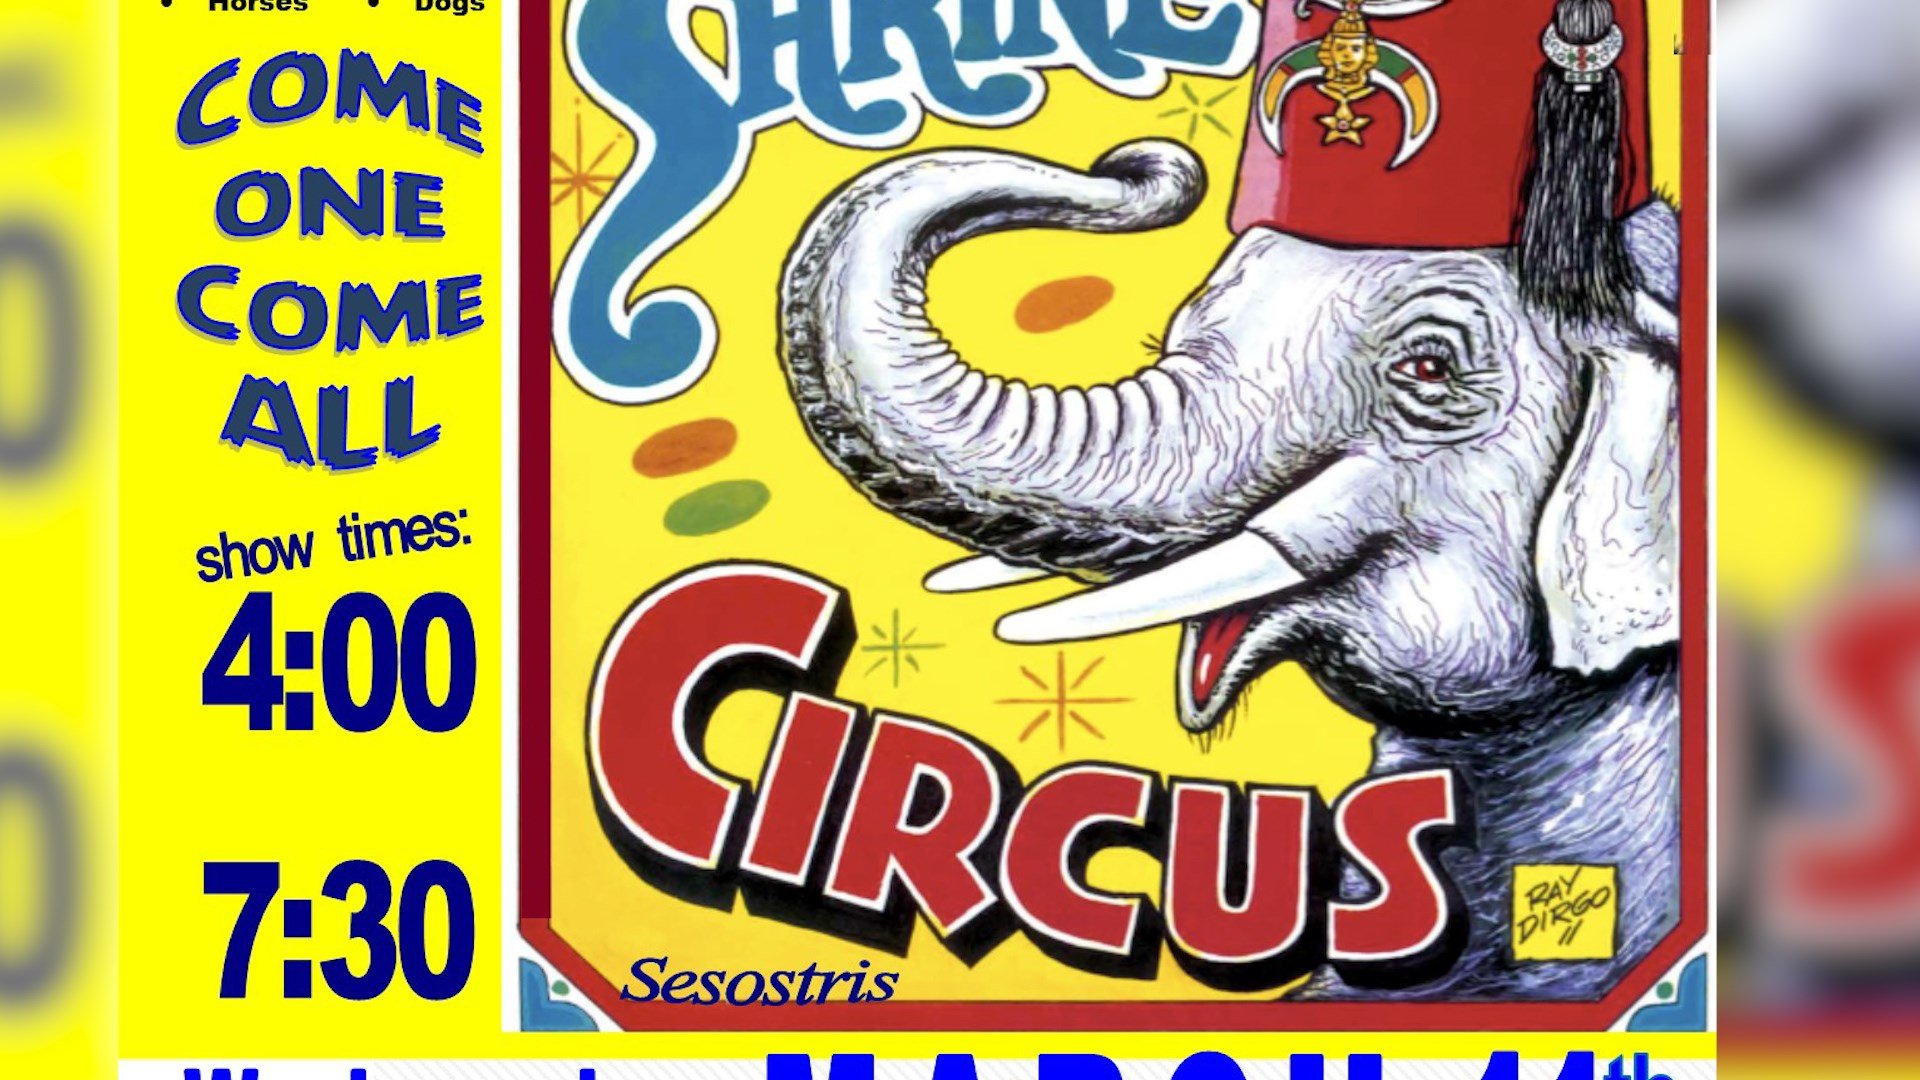 Shrine Circus coming to Columbus NEWS CHANNEL NEBRASKA